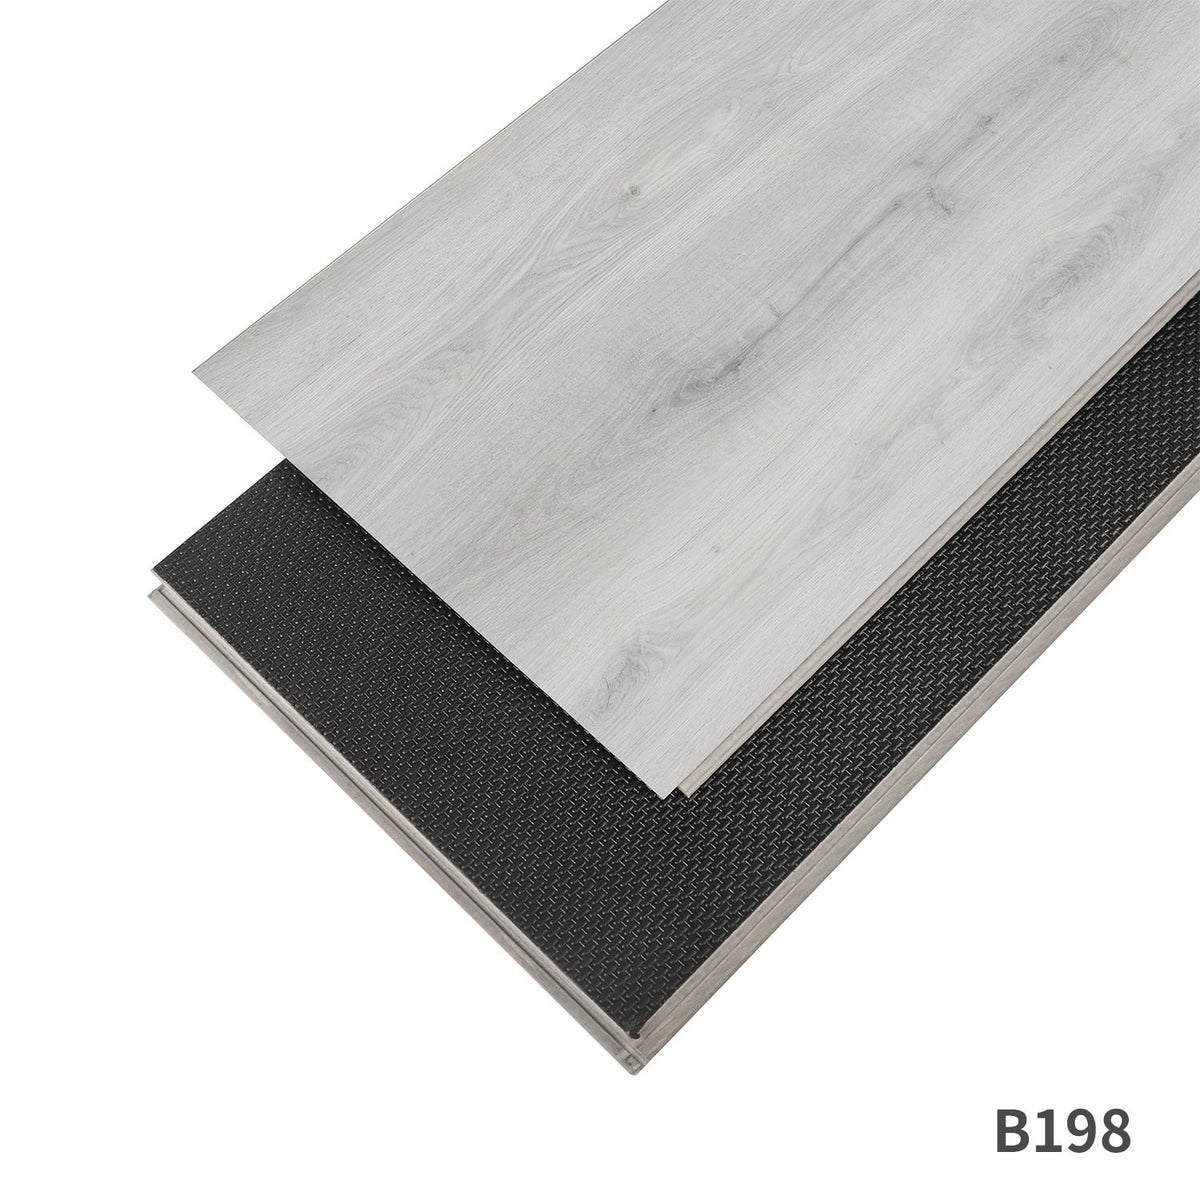 Oushe Waterproof PVC Vinyl Plank Piso Unilin Click Floor Plastic Luxury Rigid Core Tiles 5mm SPC Flooring with IXPE